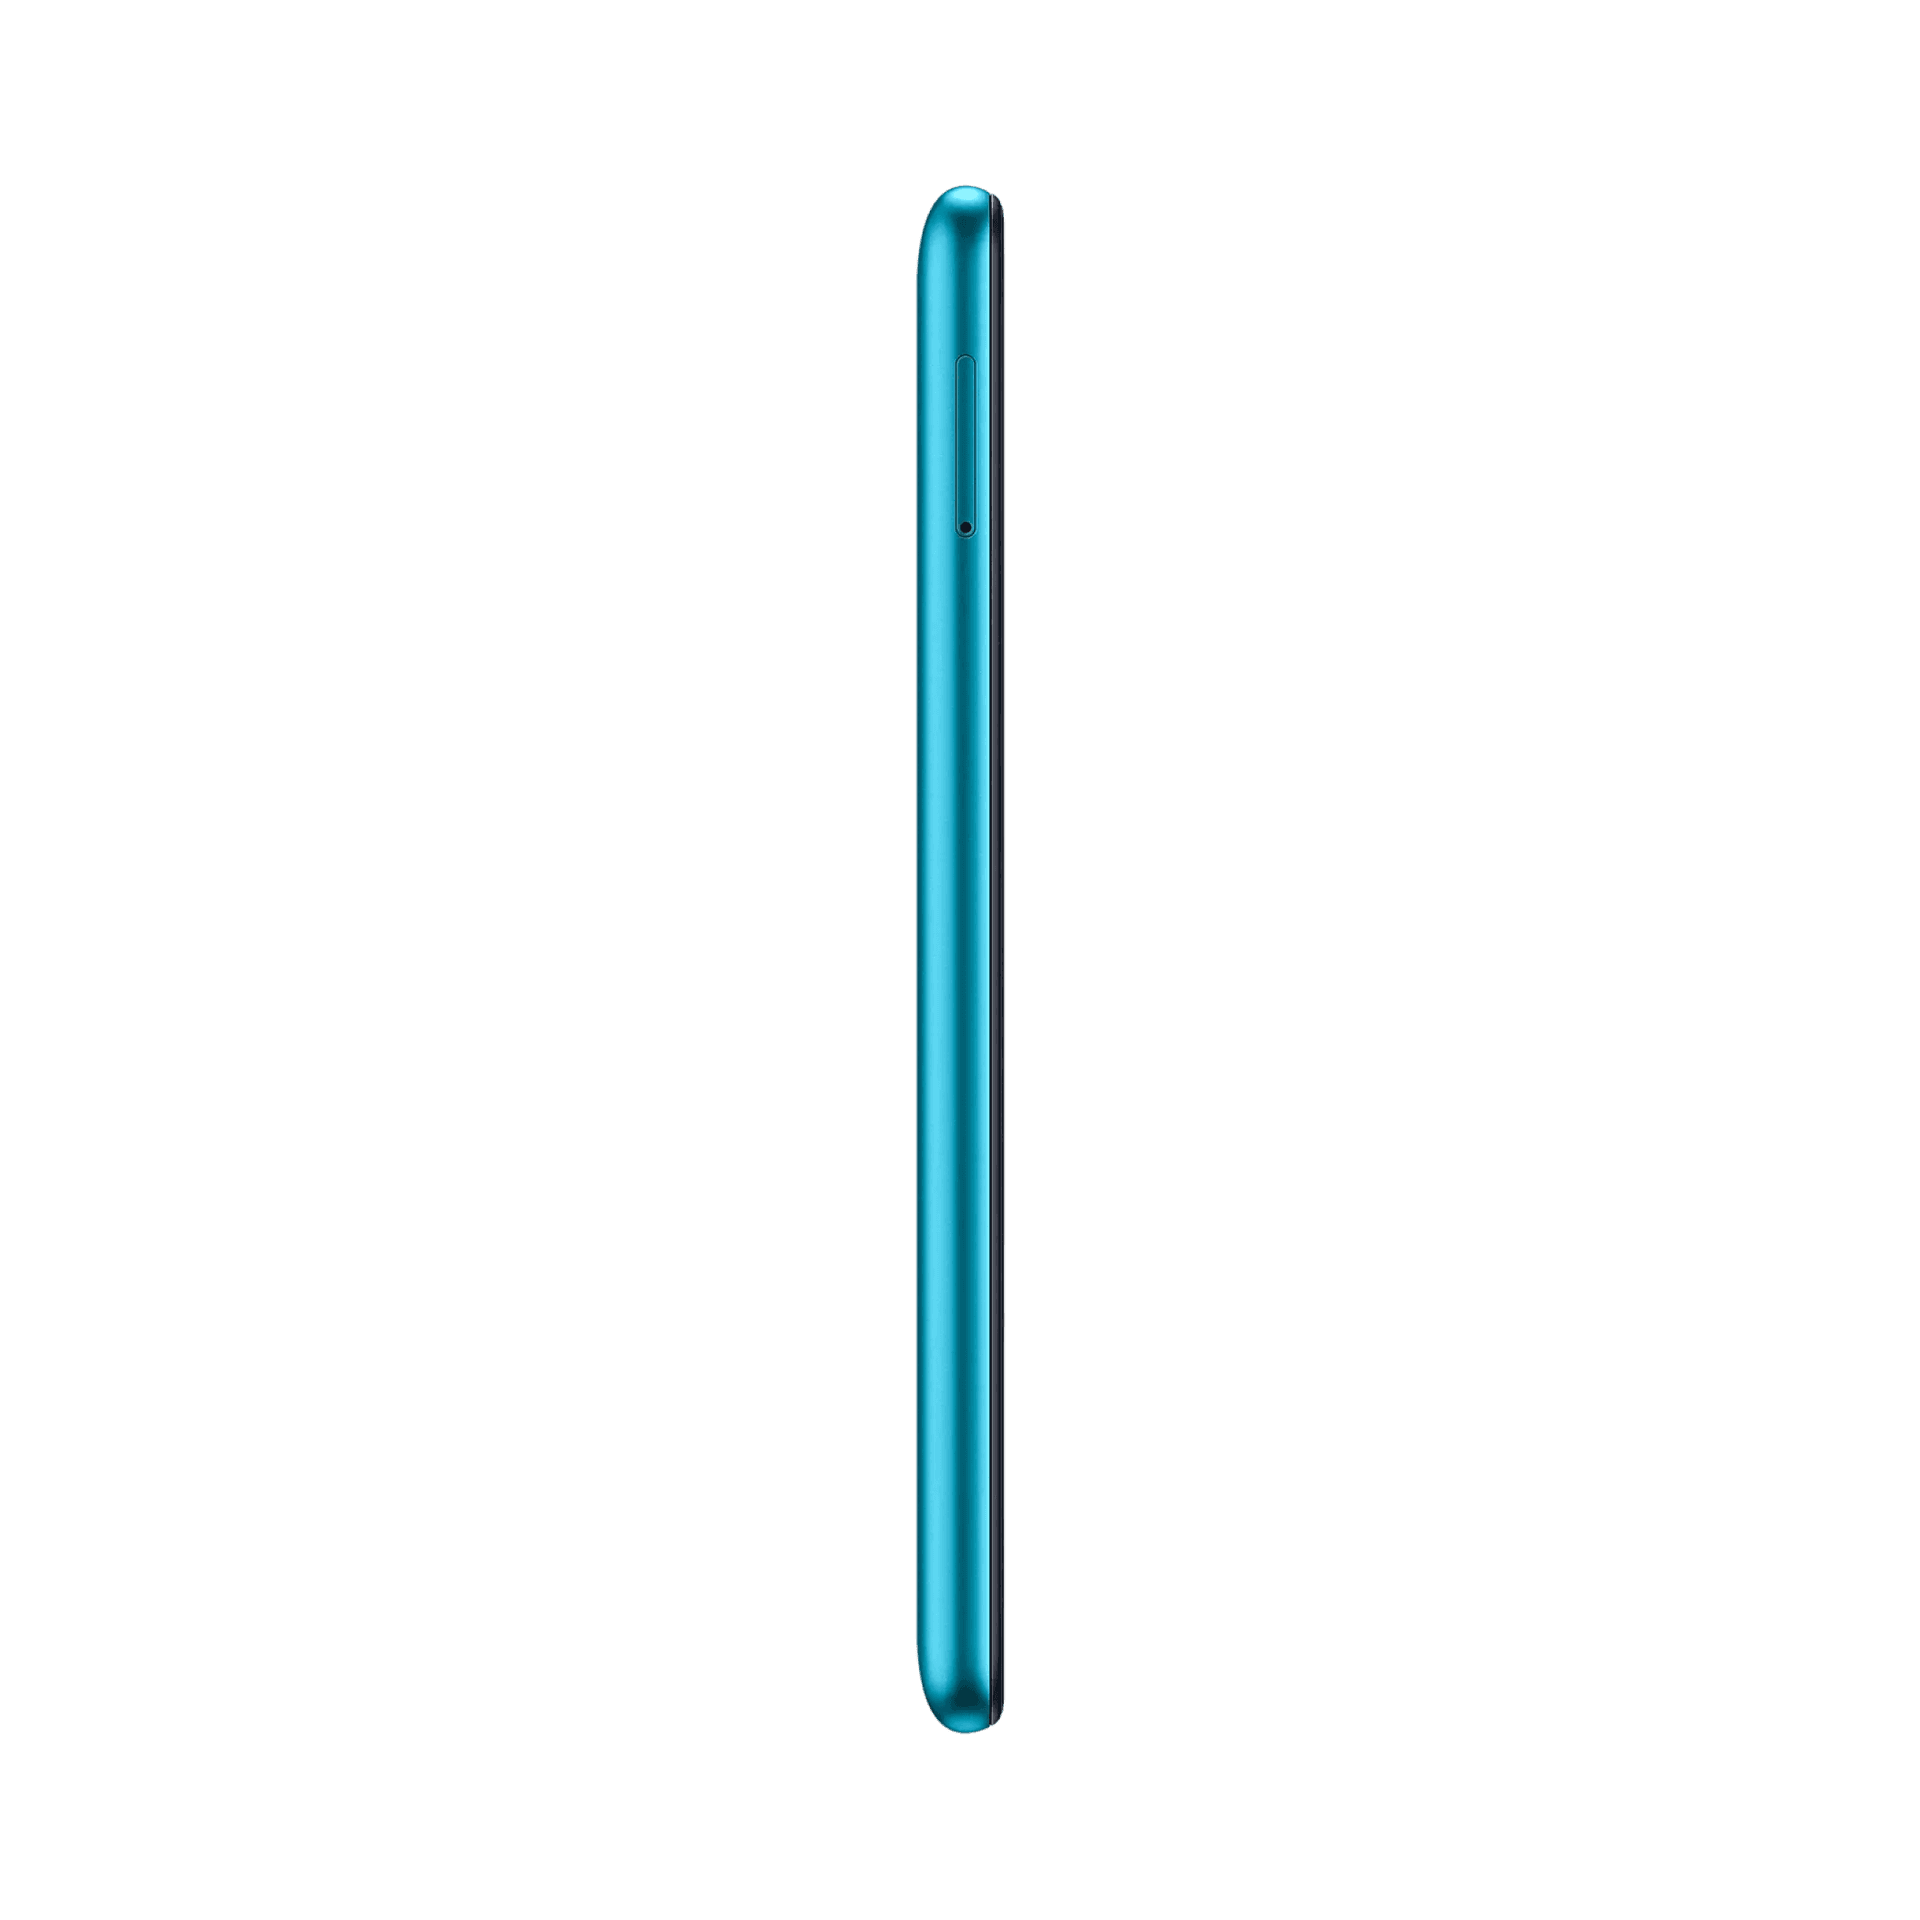 Samsung Galaxy M11 - 32 GB - Metalik Mavi